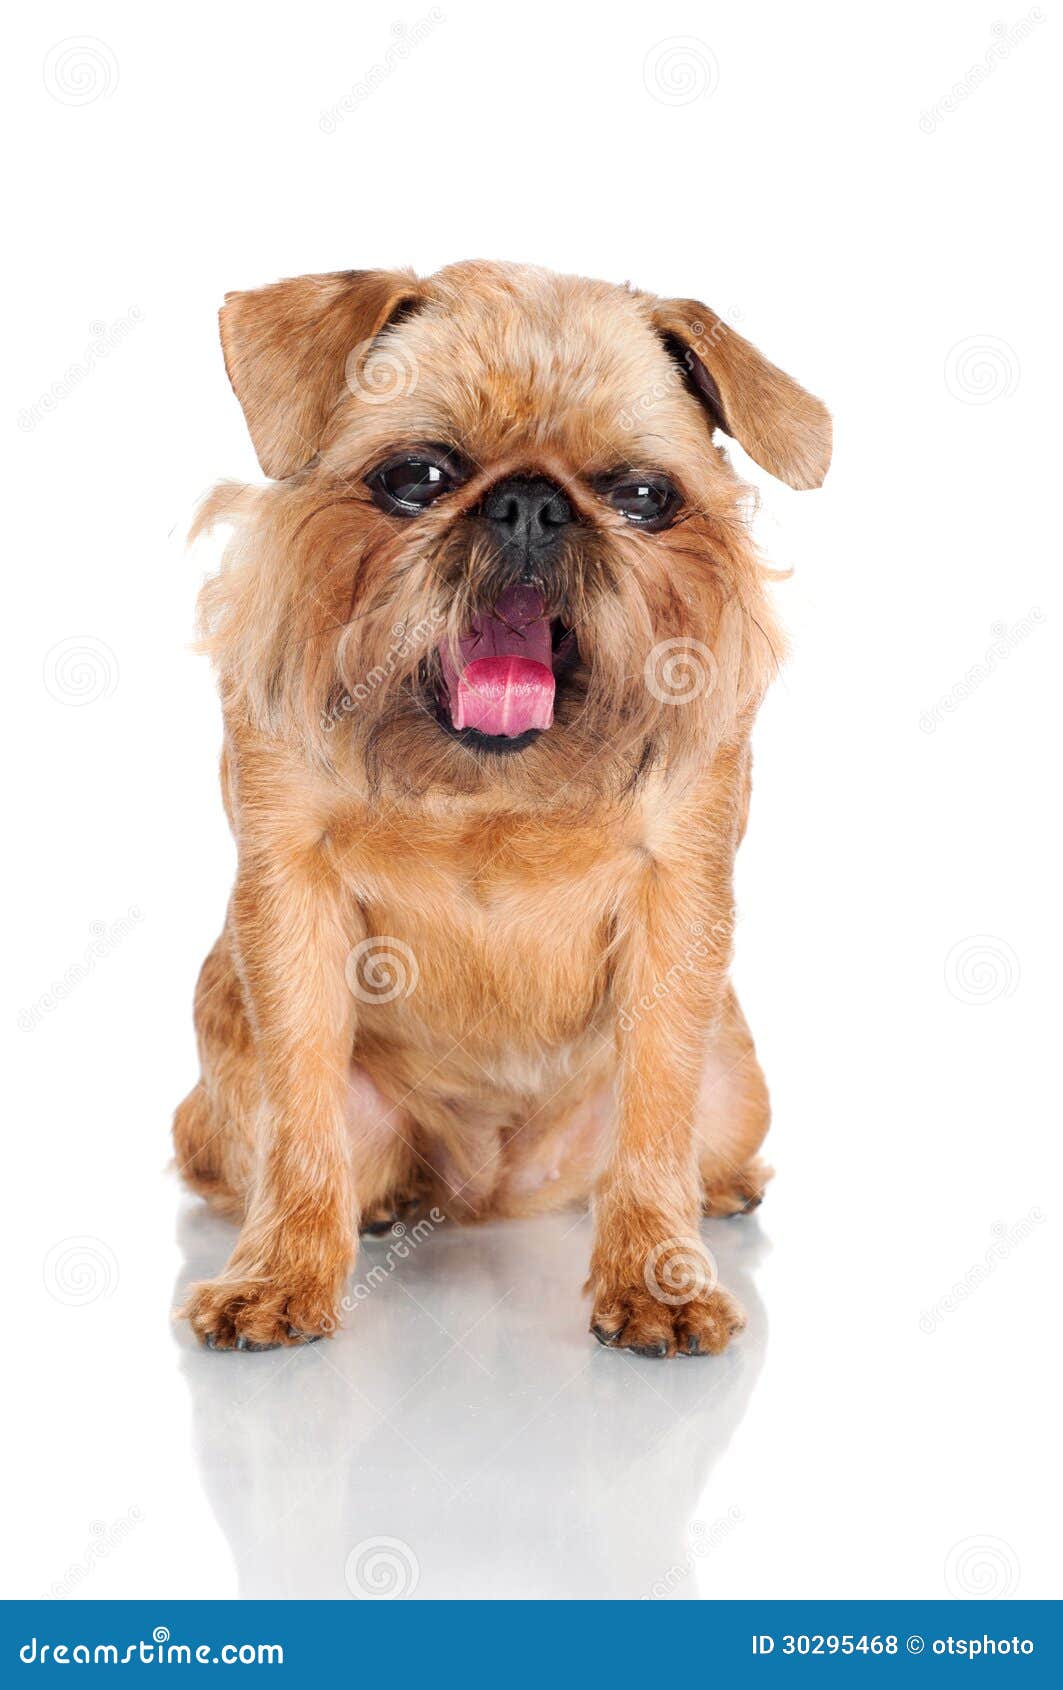 Brussels Griffon Dog Yawning Stock Photo - Image of cheerful, beige ...